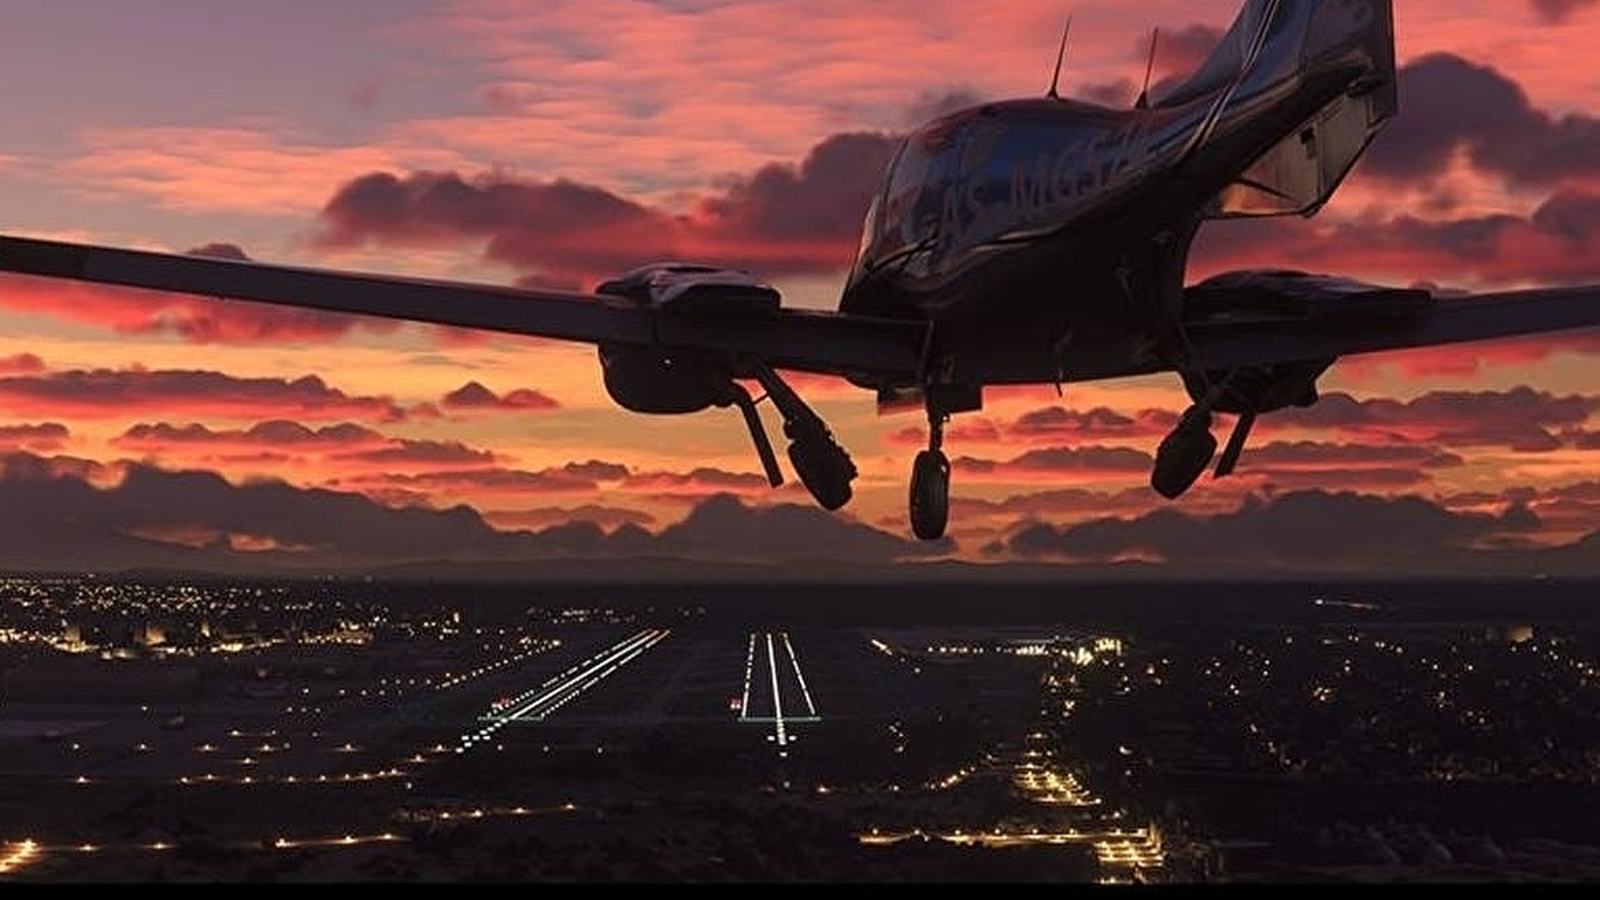 Microsoft Flight Simulator - Metacritic